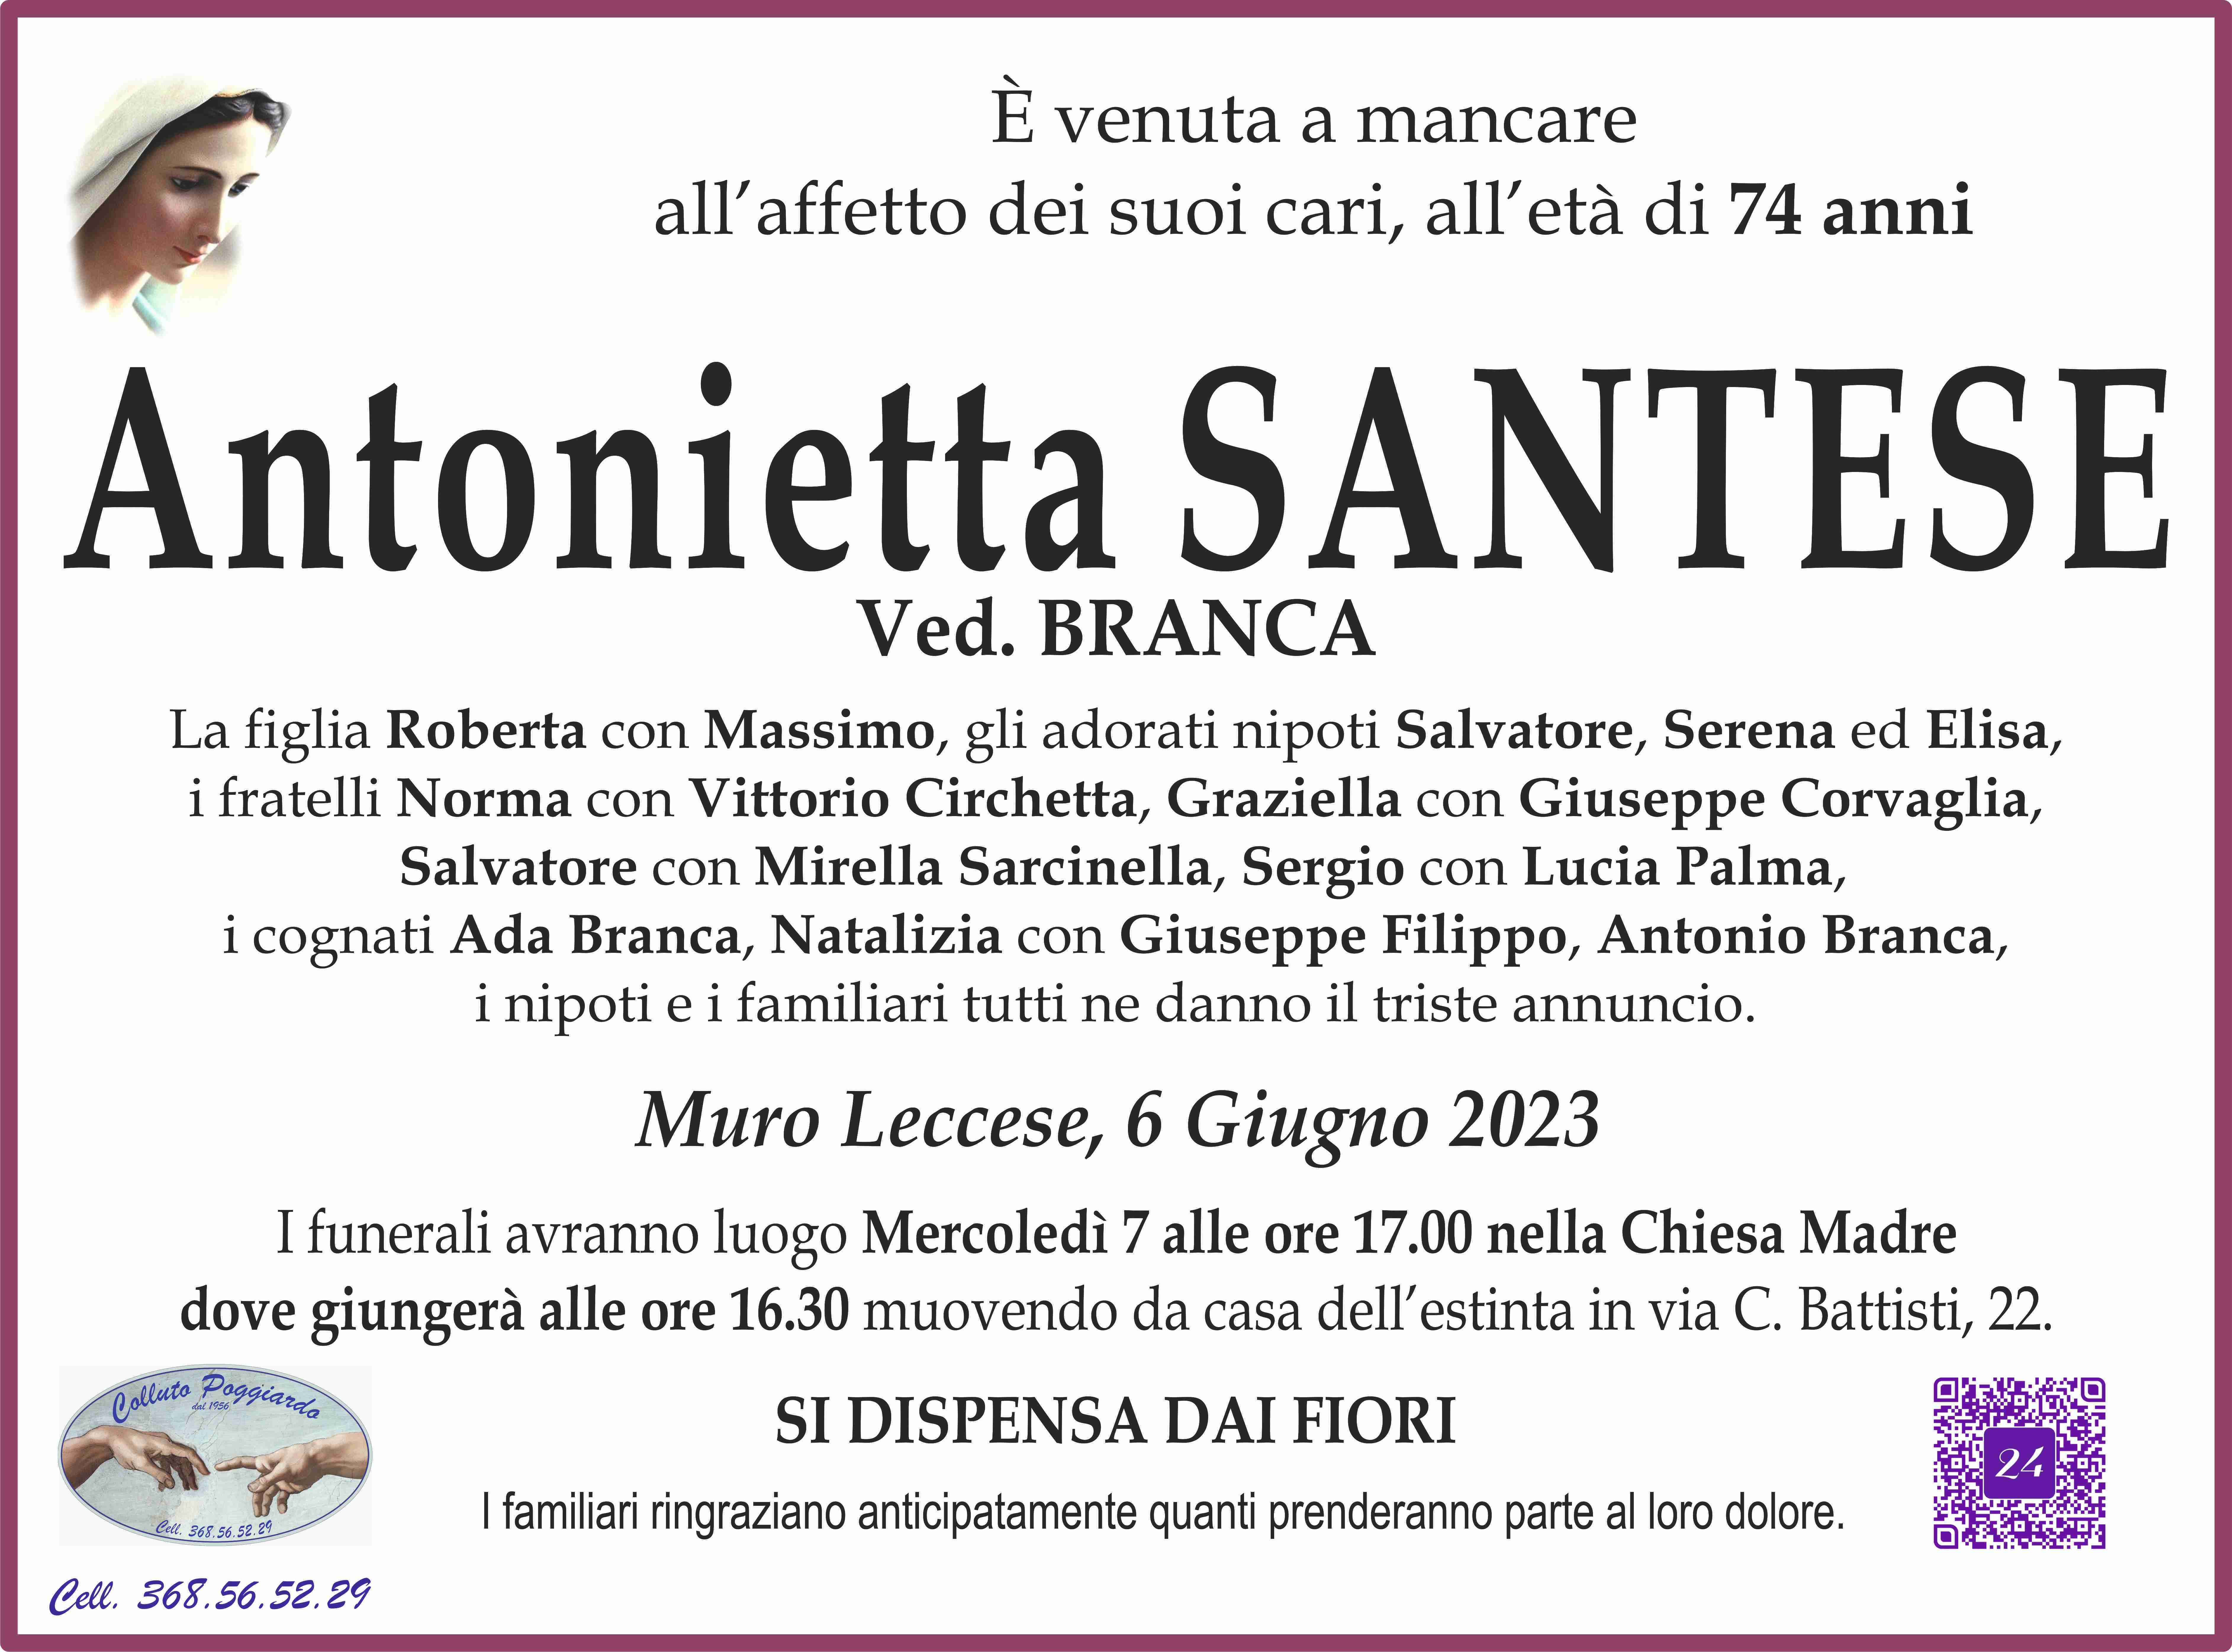 Antonietta Santese